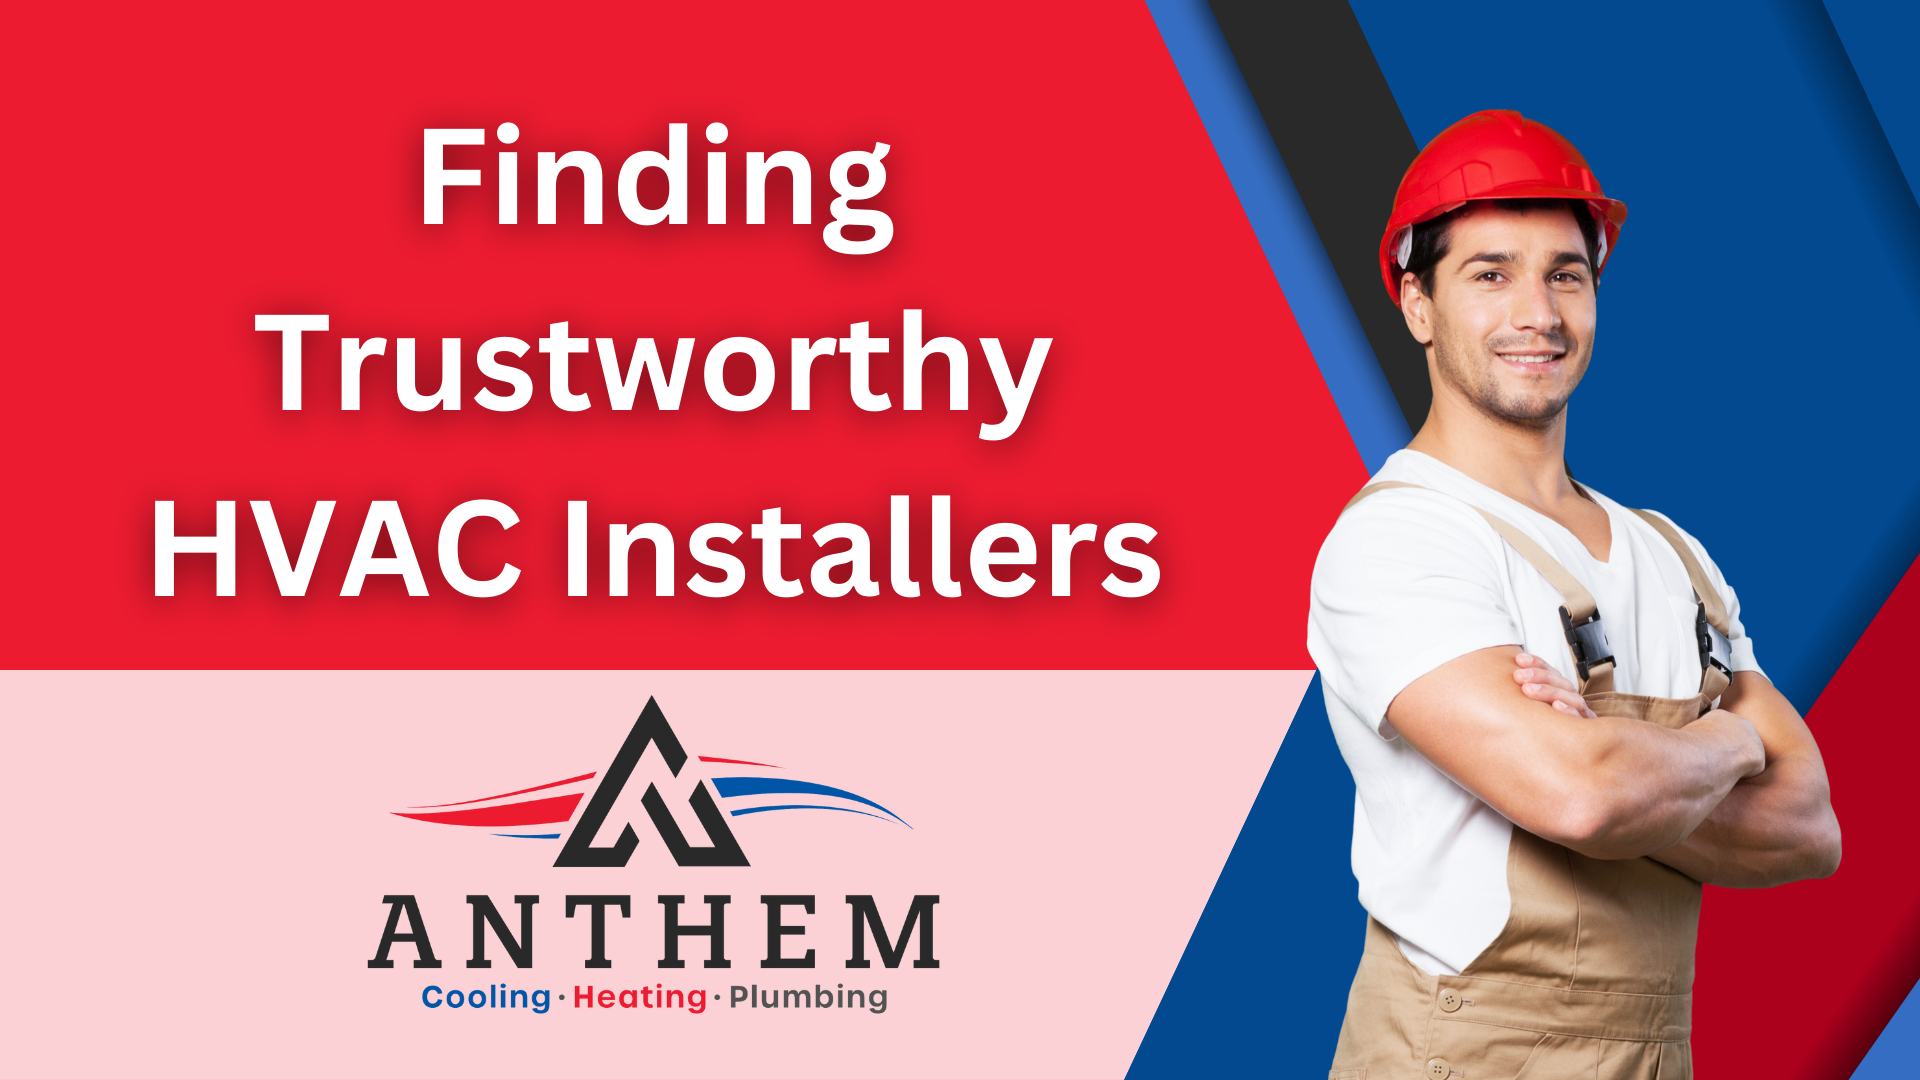 Finding Trustworthy HVAC Installers